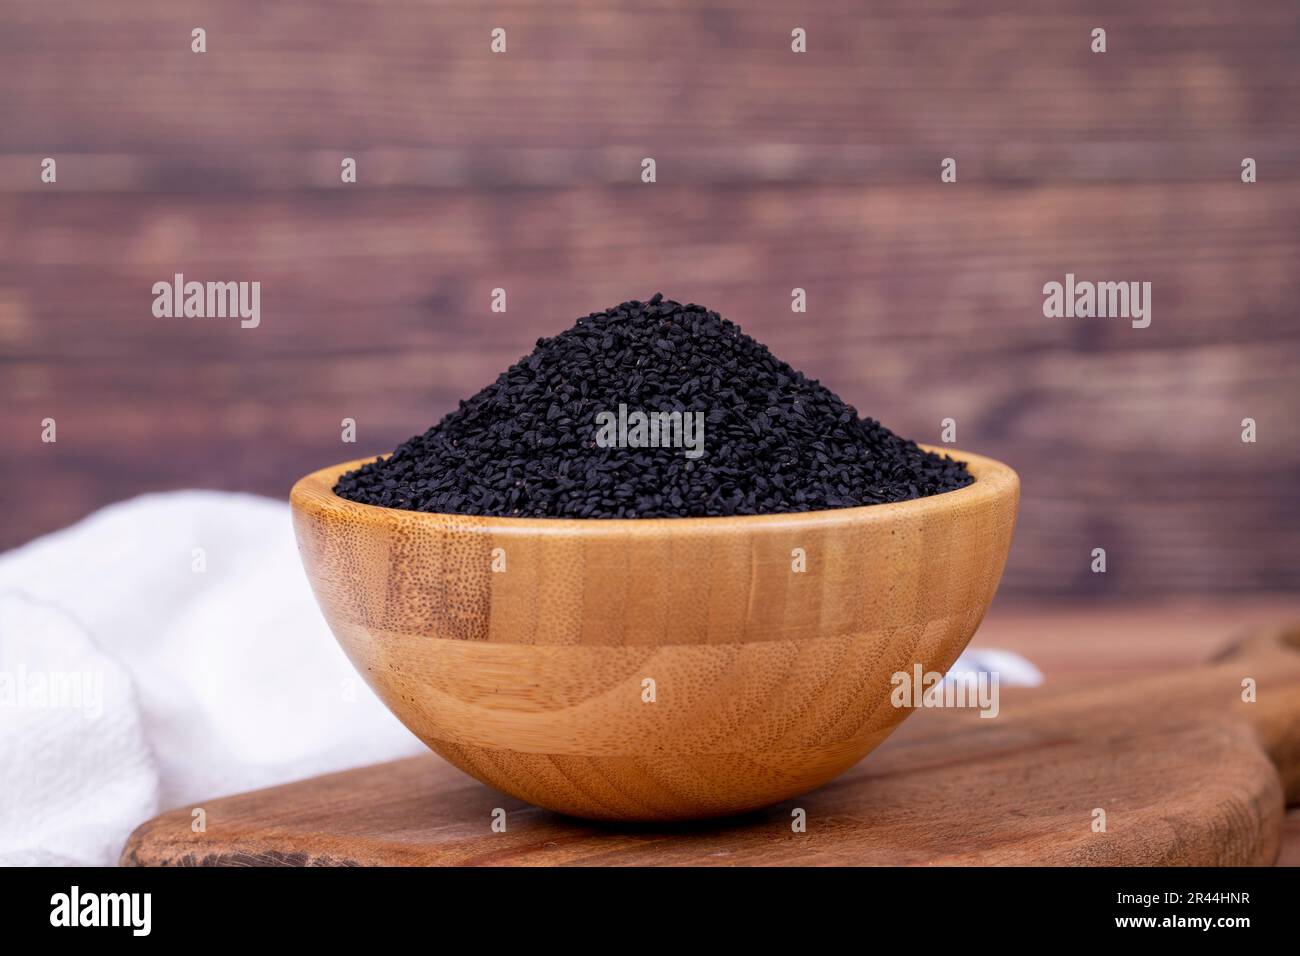 Black cumin or nigella sativa on wooden background. Black cumin seeds in wooden bowl. Kalonji, nigella, black cumin Stock Photo